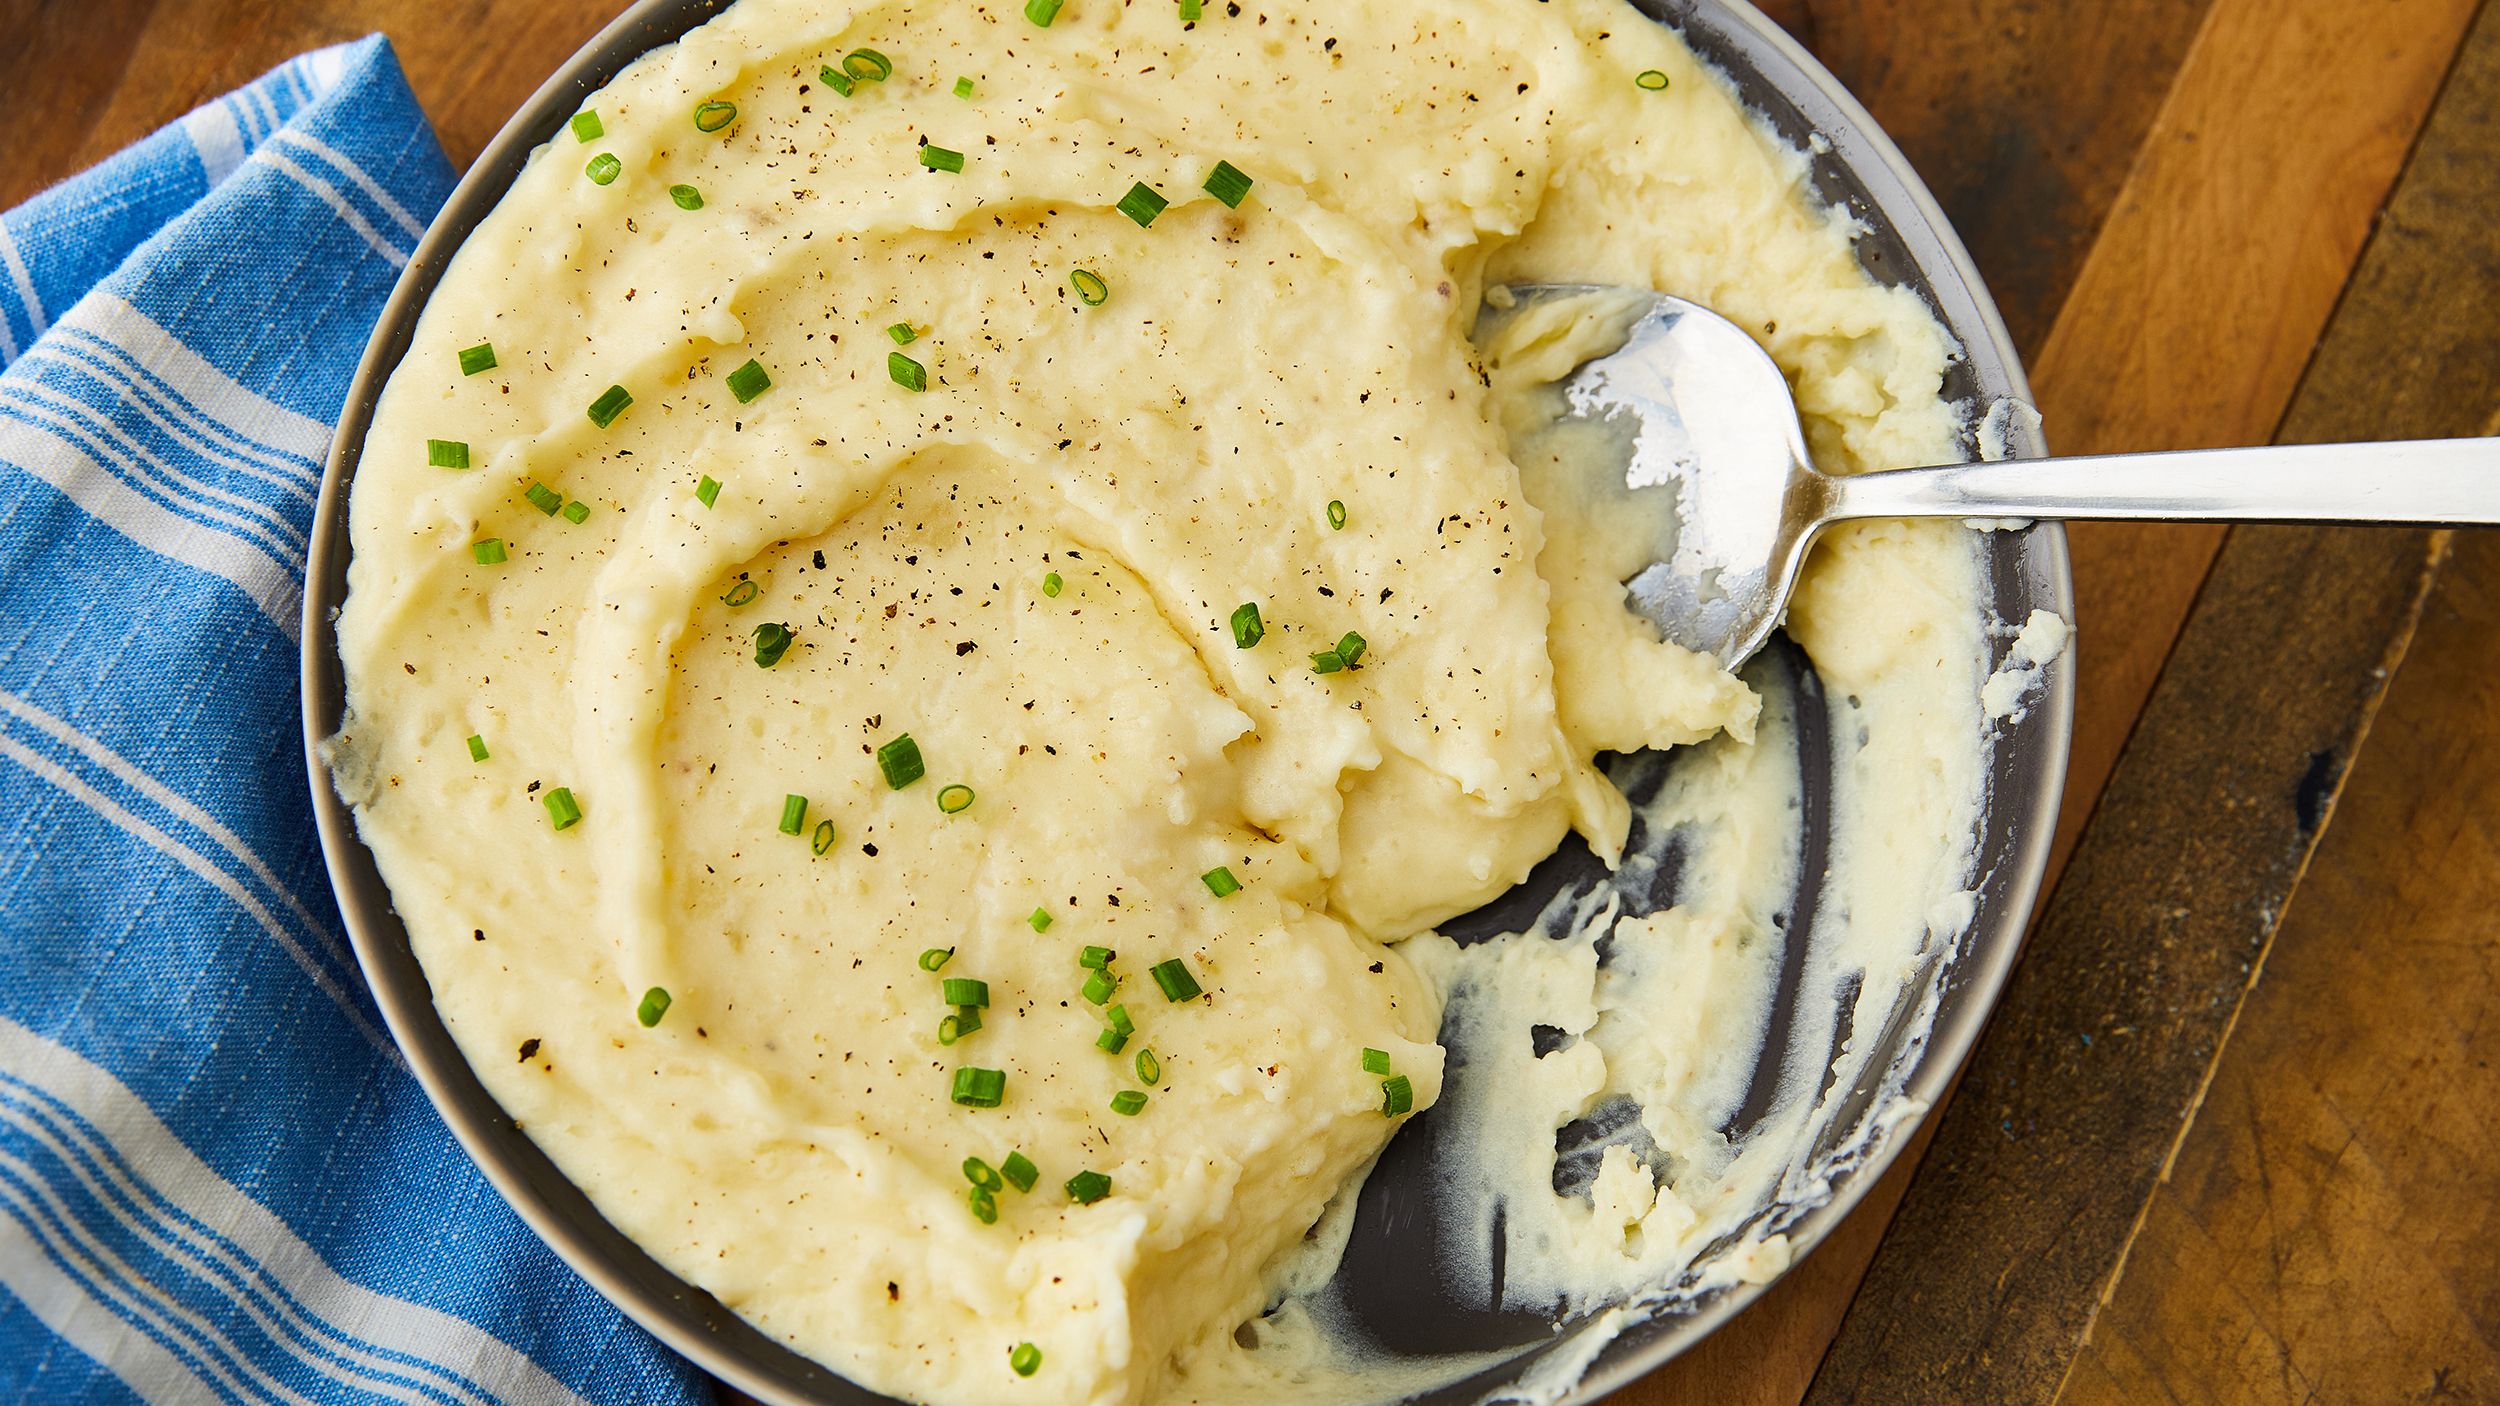 https://hips.hearstapps.com/hmg-prod/images/cream-cheese-mashed-potatoes-horizontal-1533935260.jpg